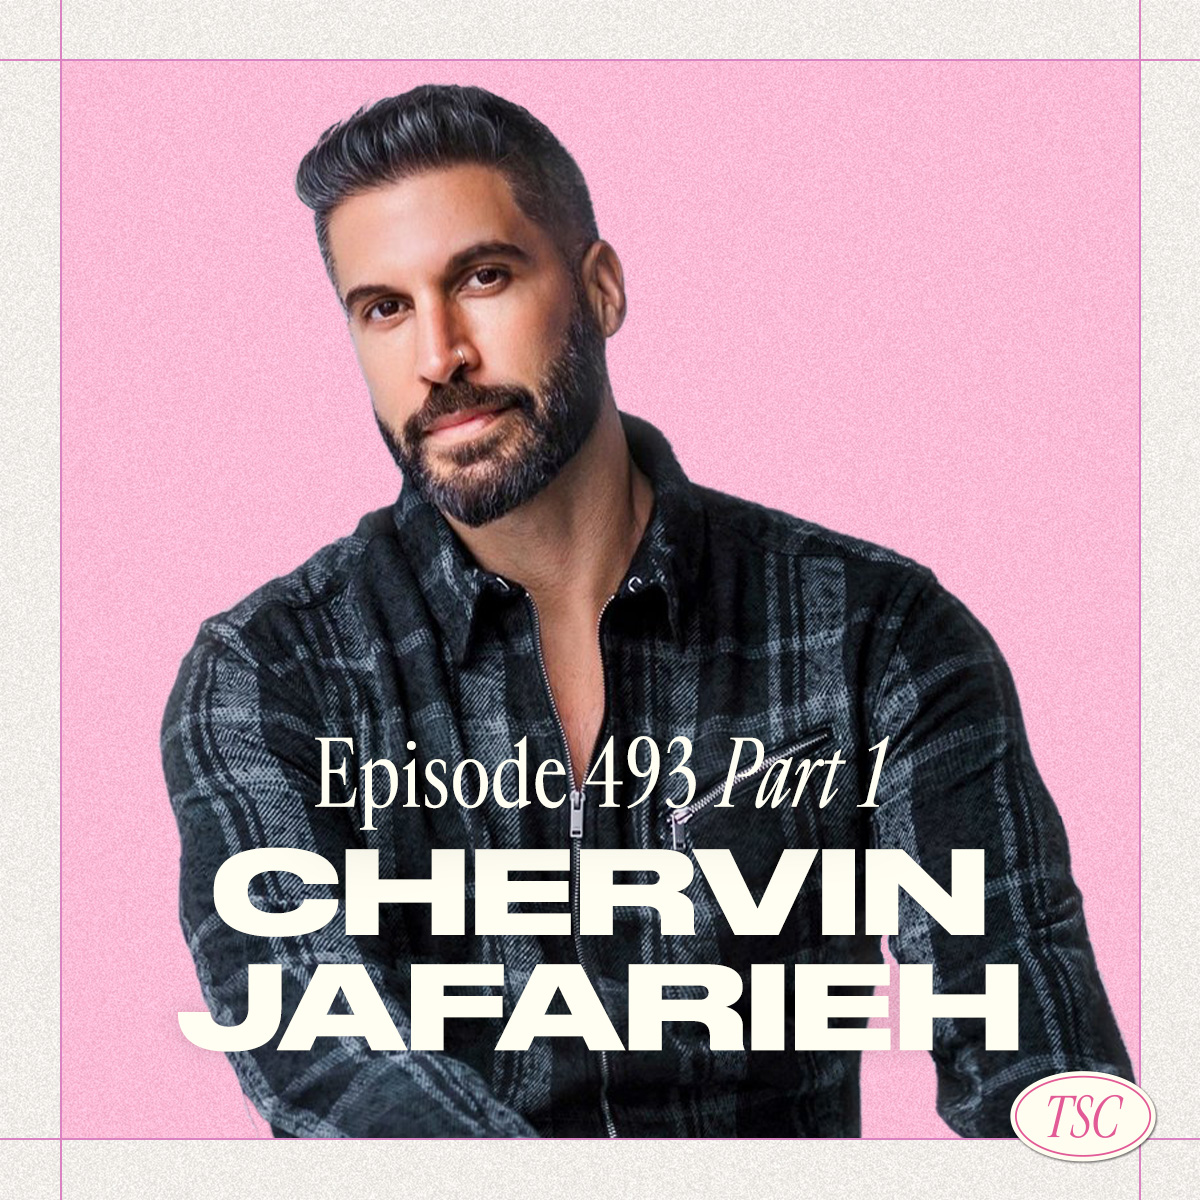 Chervin Jafarieh (pt. 3 – Part 1 of 2)